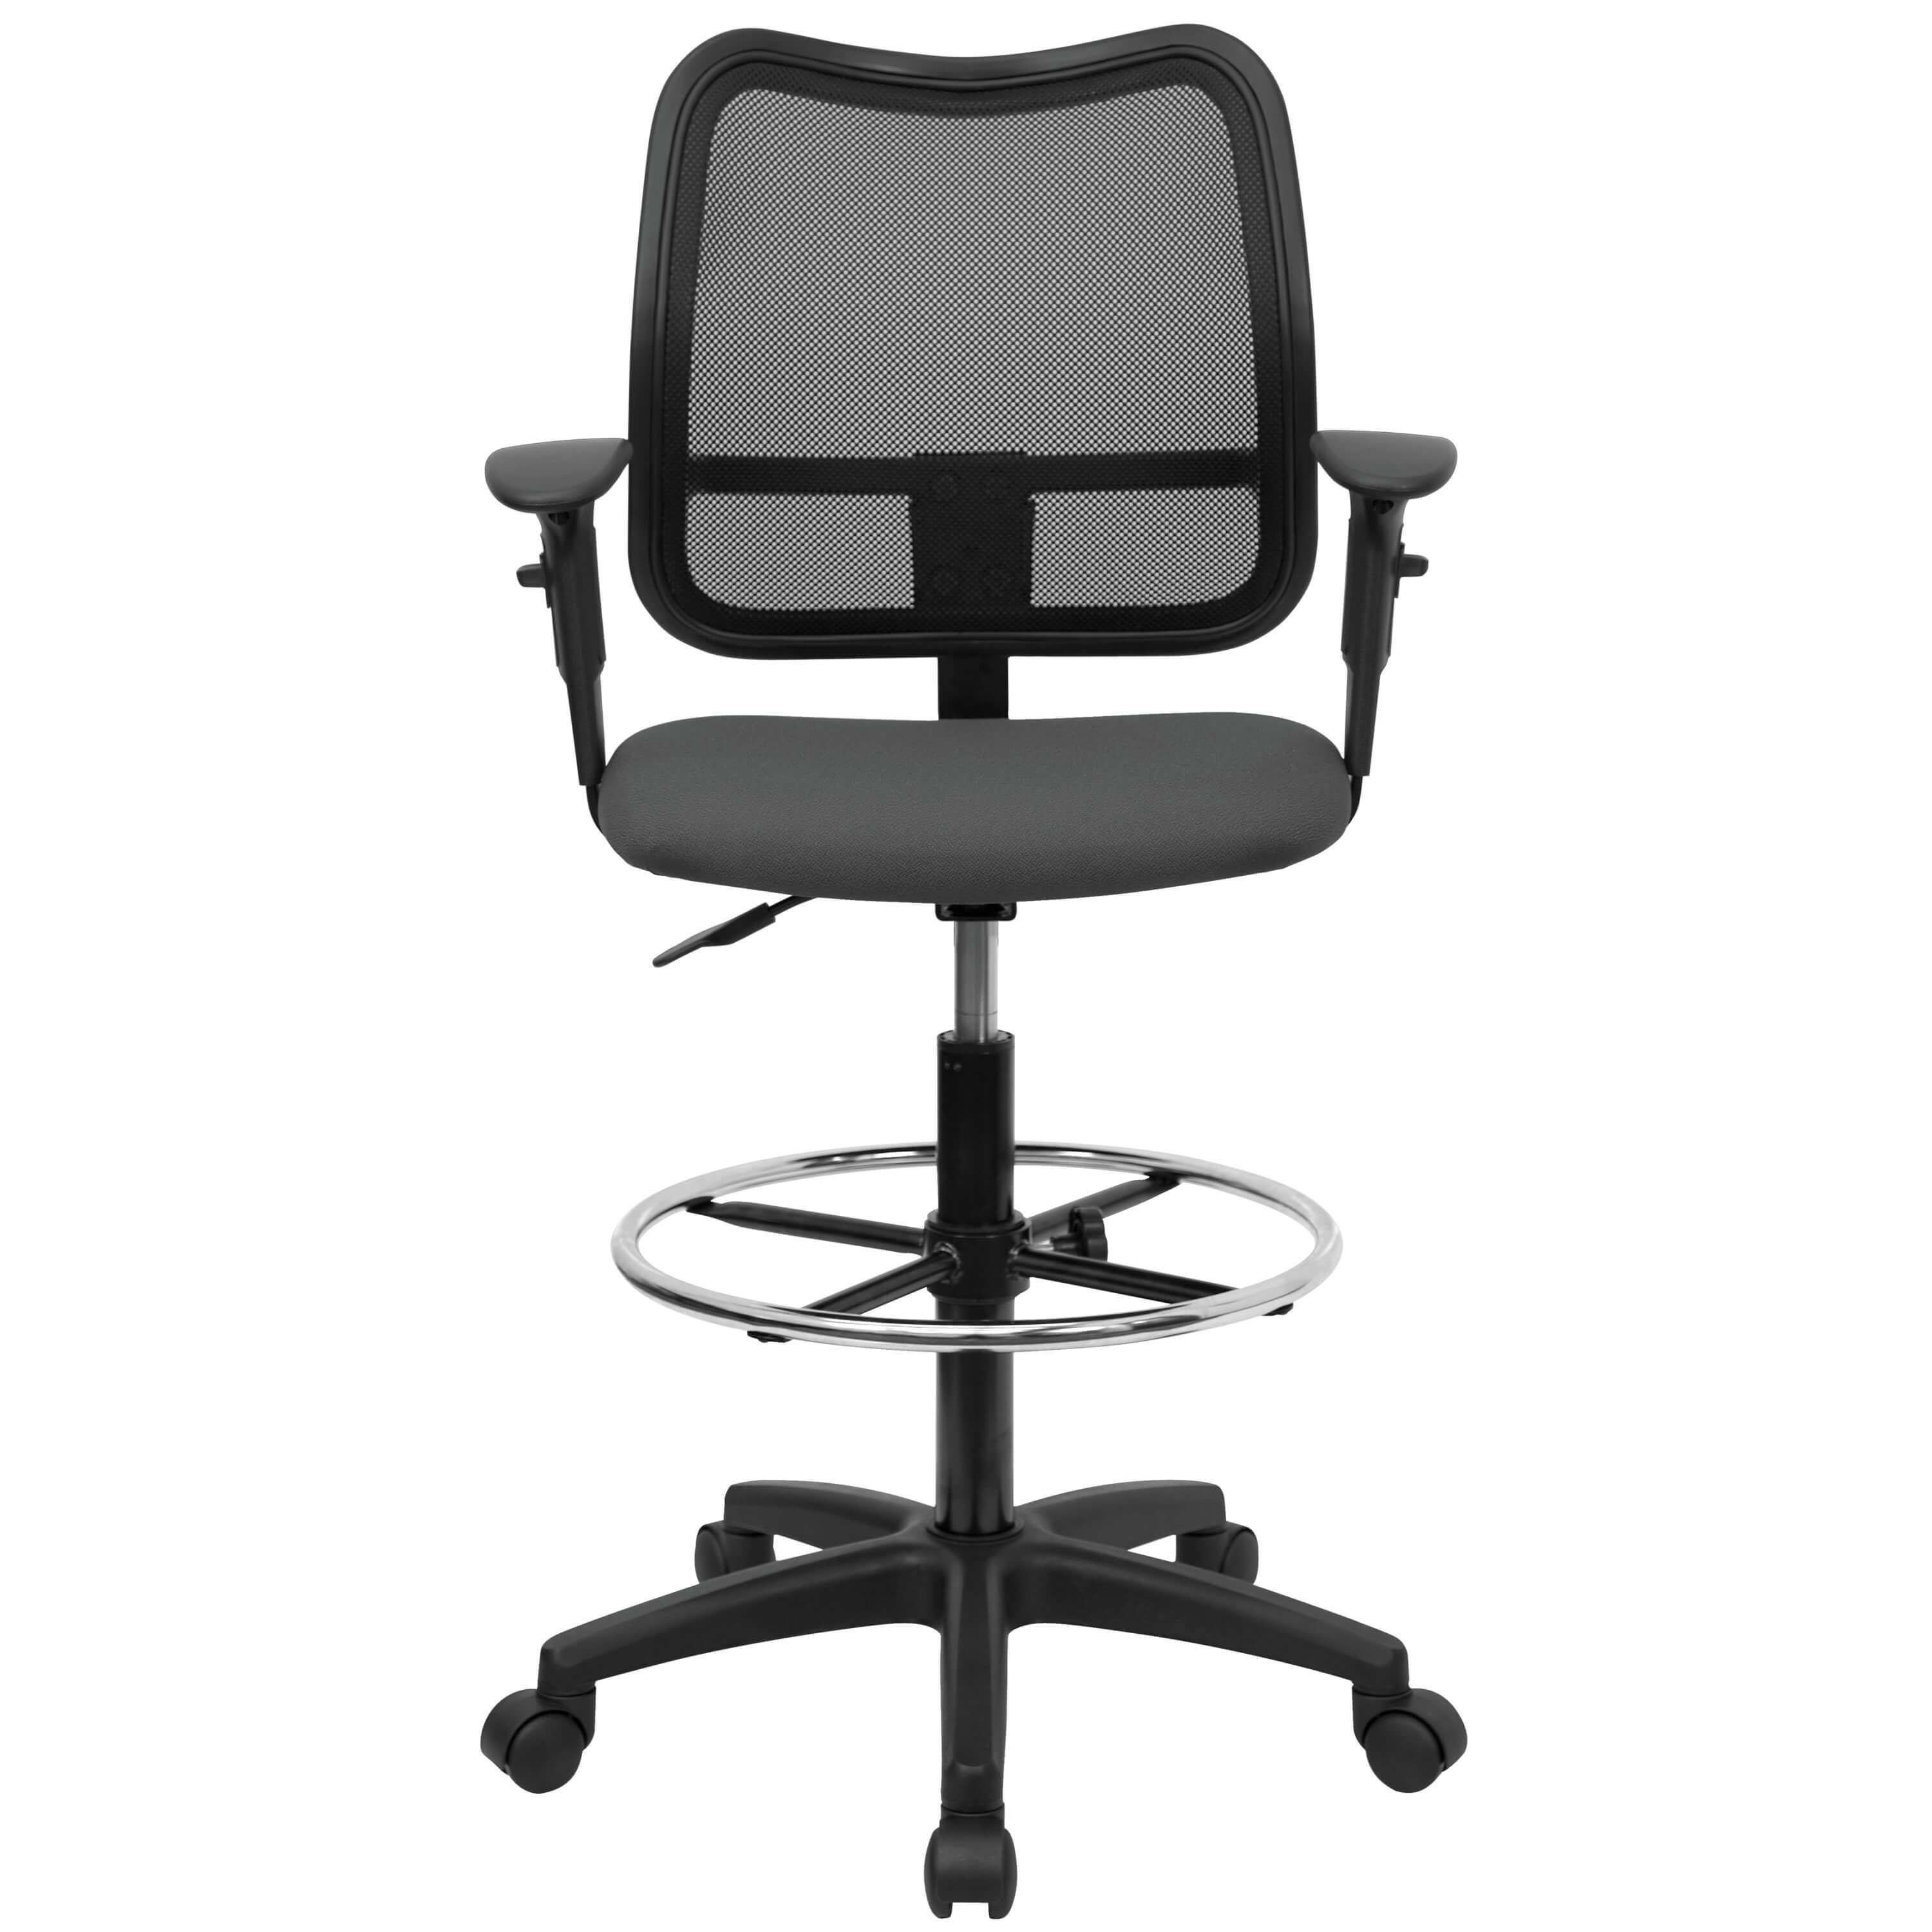 Cool desk chairs CUB WL A277 GY AD GG FLA